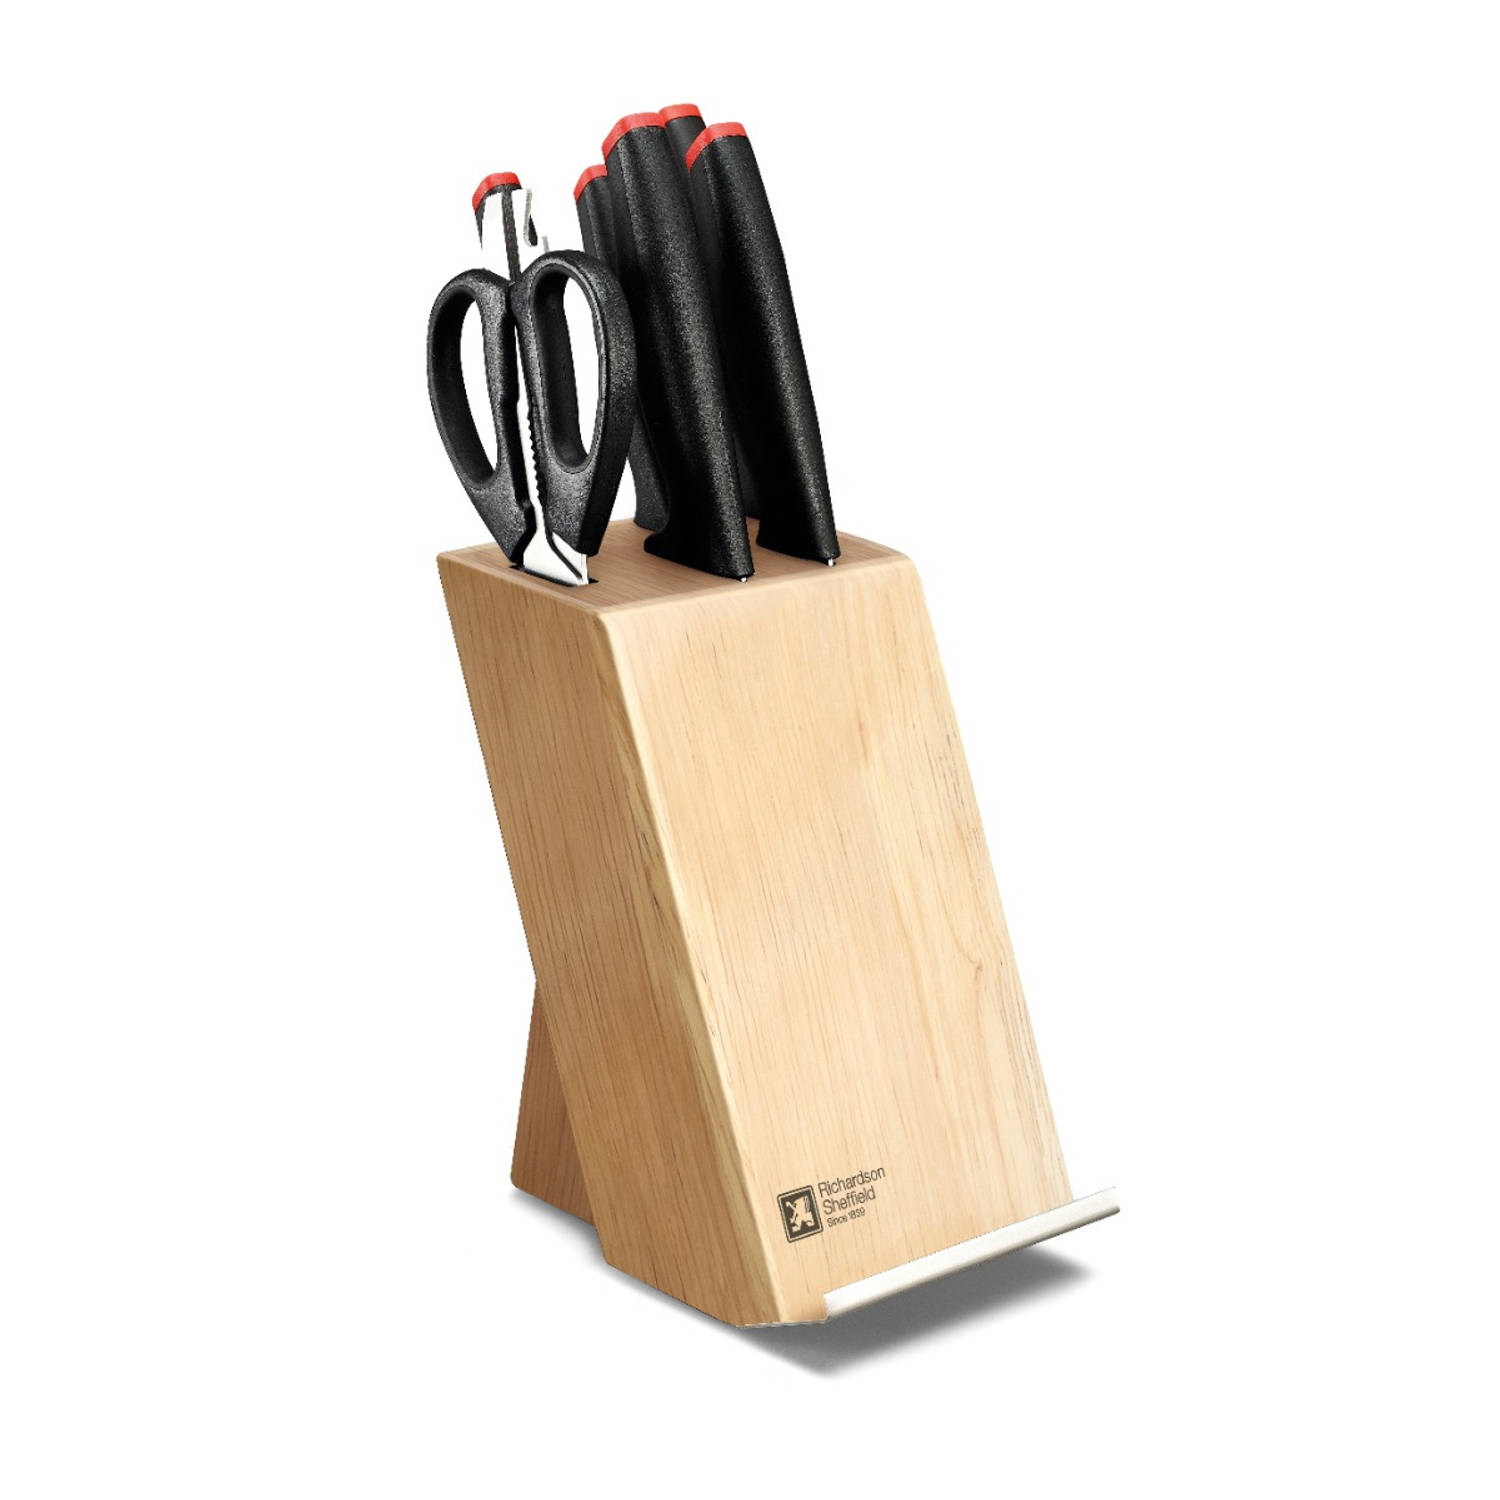 Richardson Sheffield LASER New Laser 6-pcs Knife Block Set in gift box